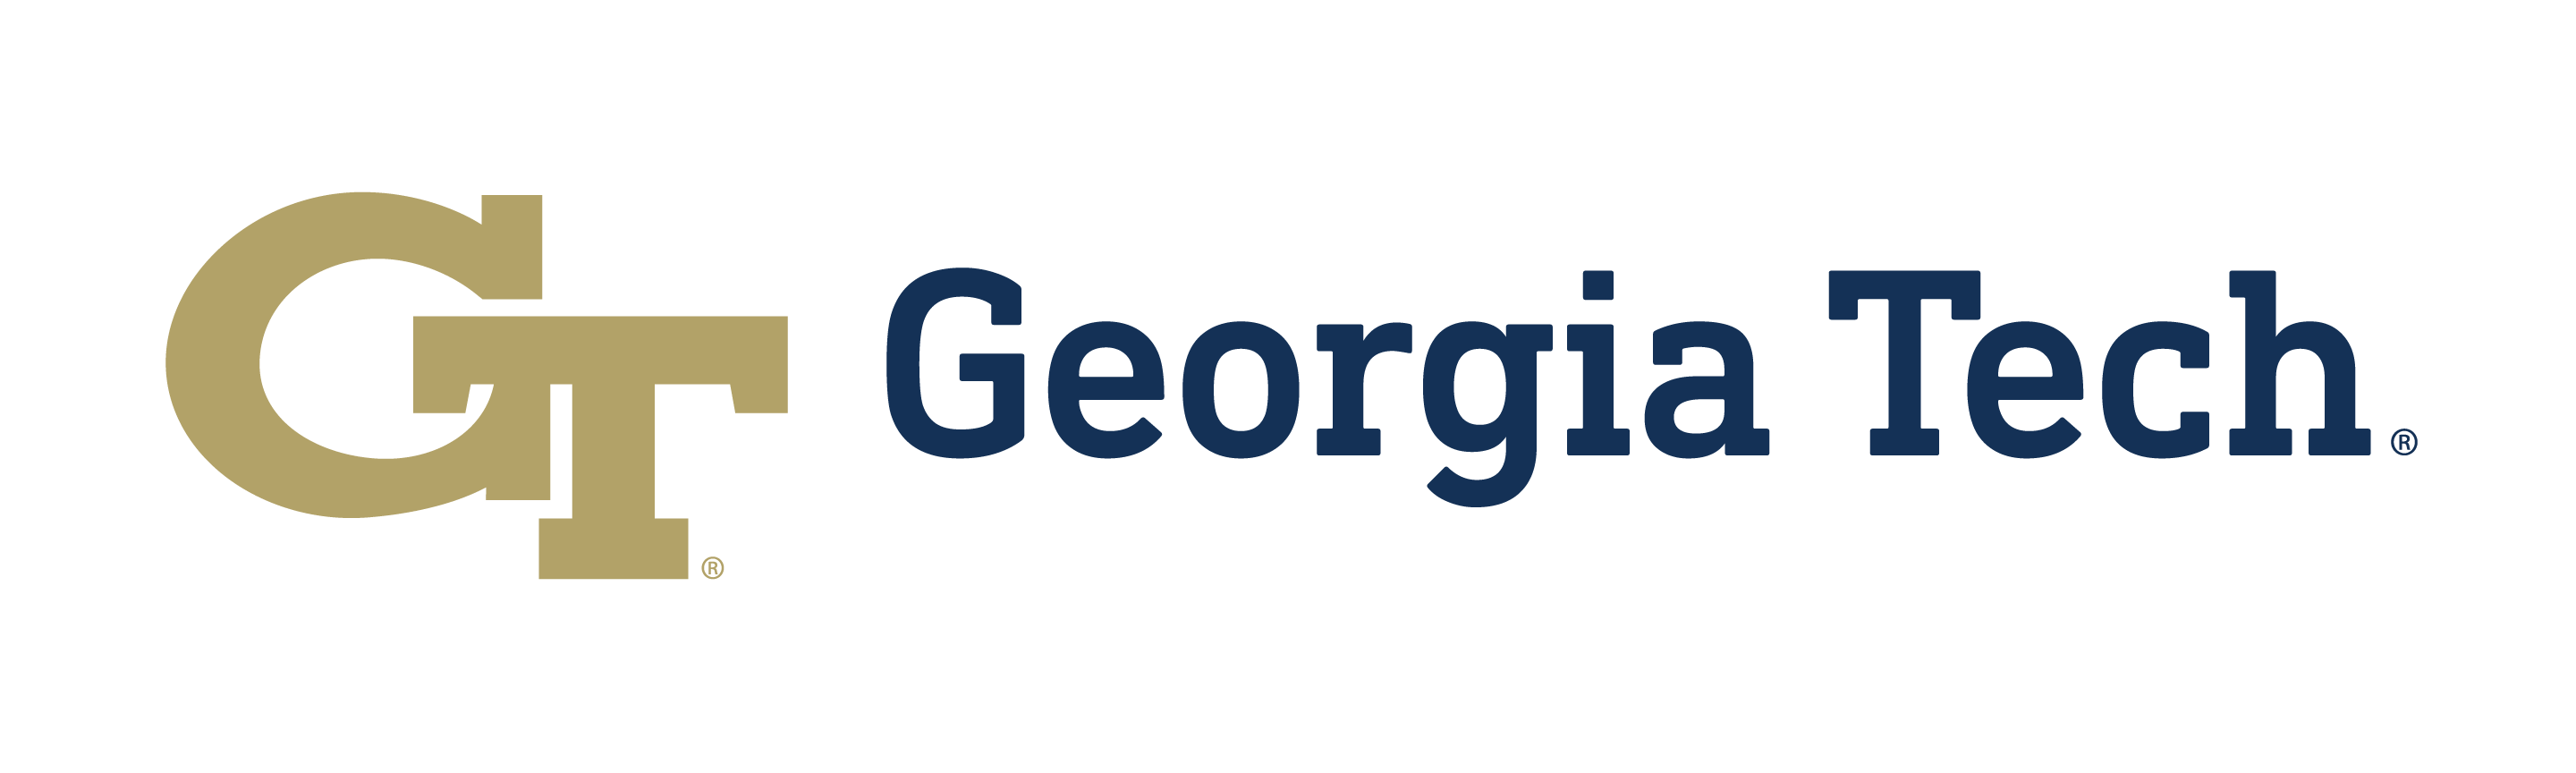 Extended Georgia Tech logo - one line